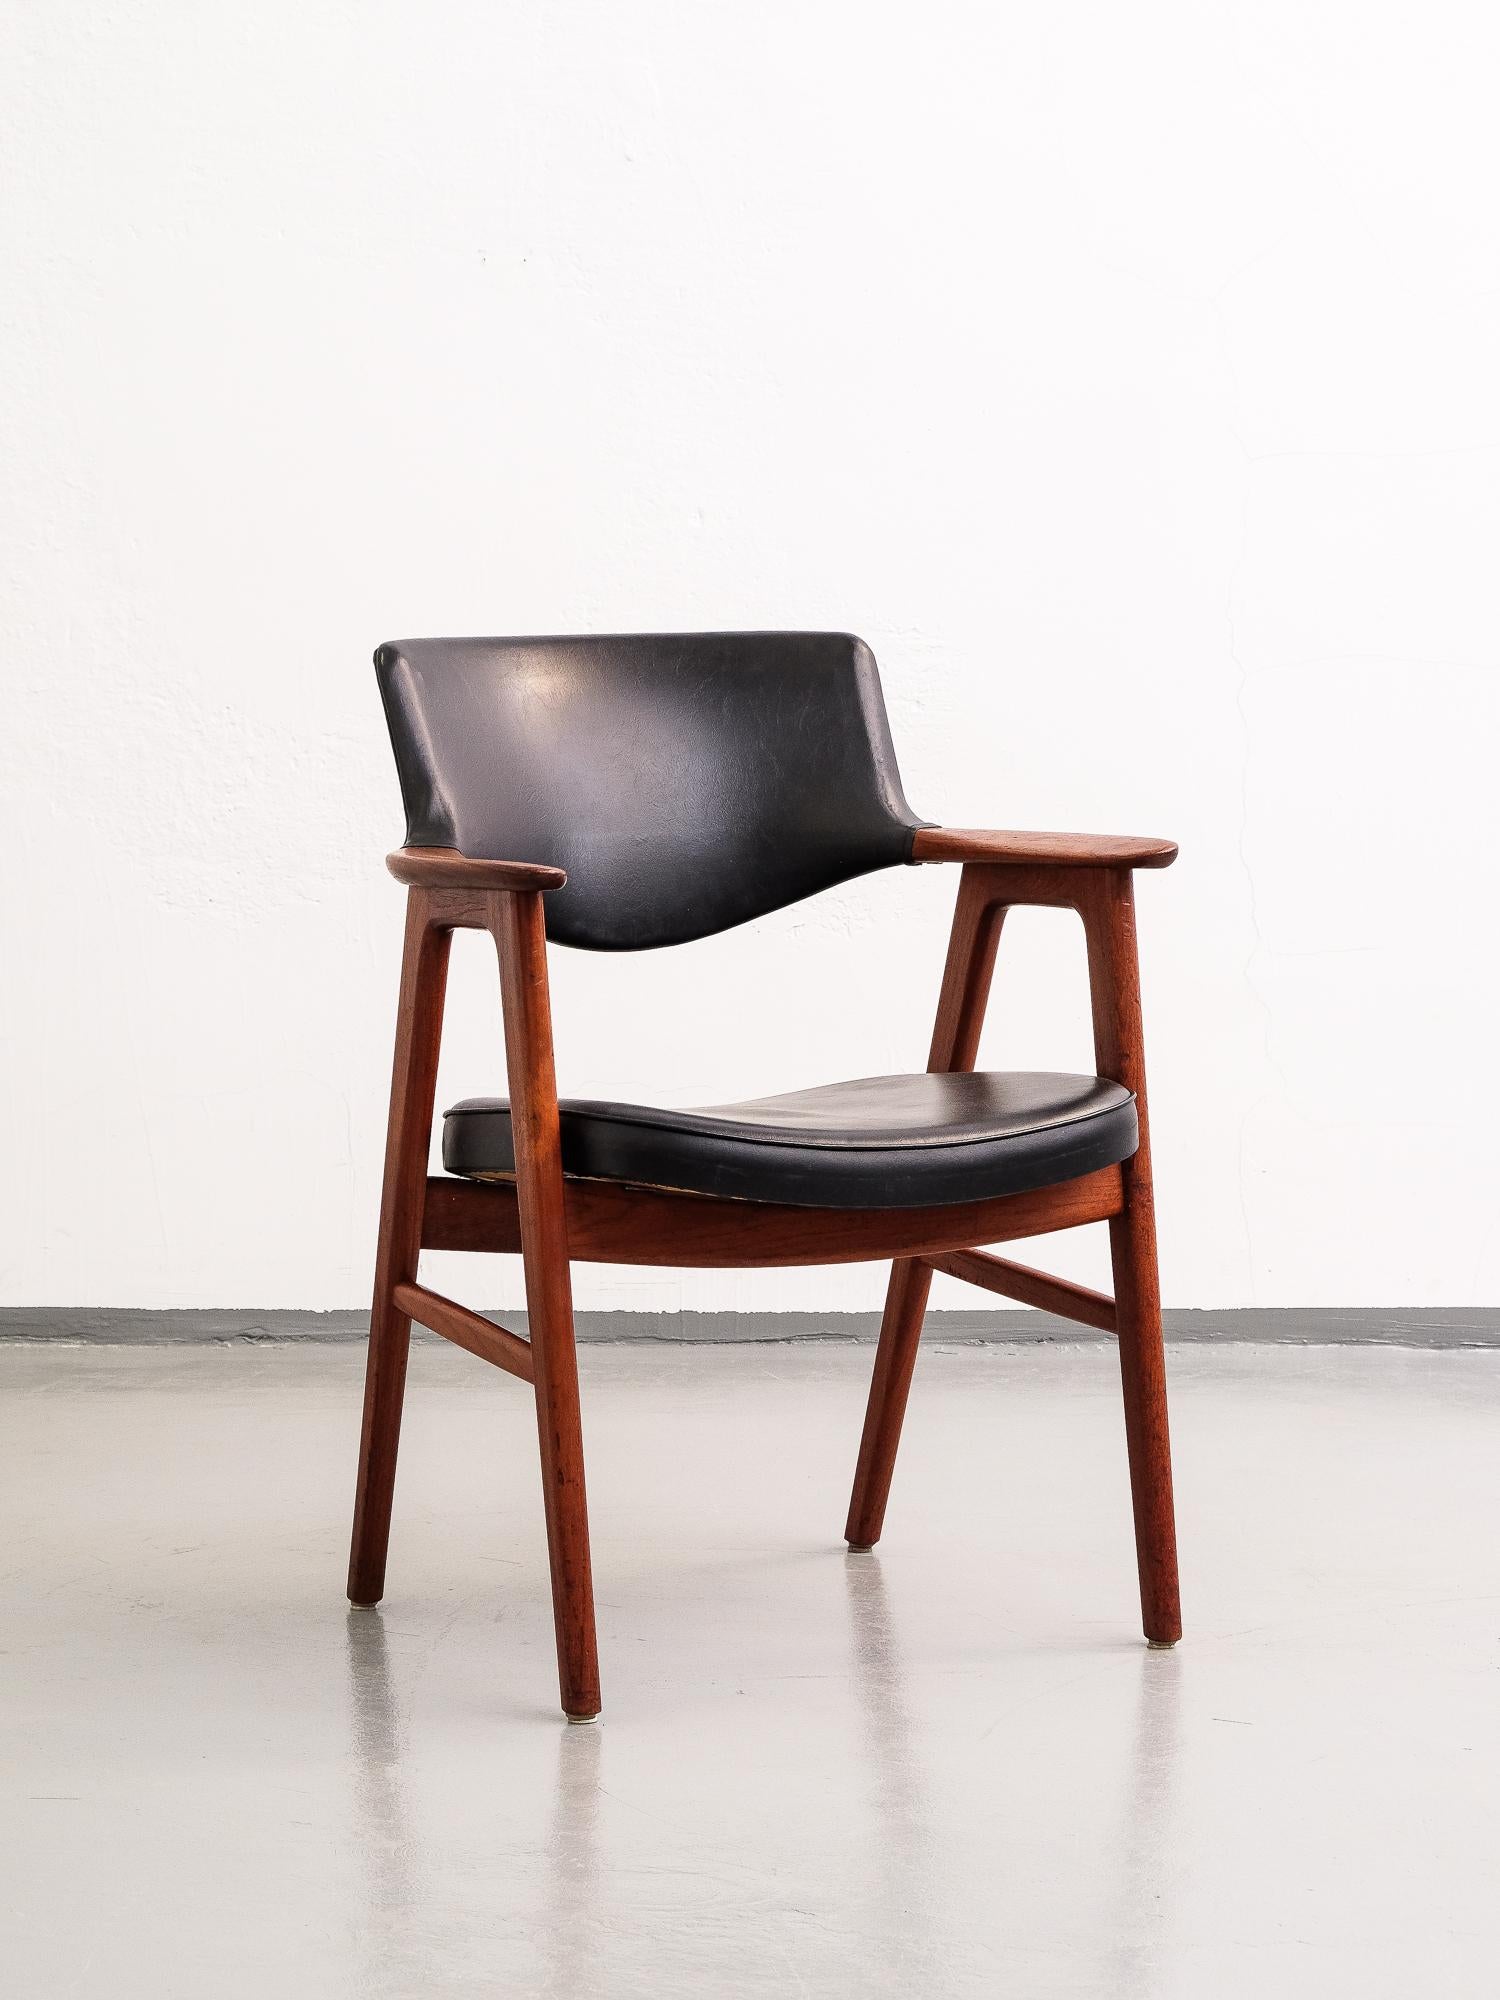 Wonderful Erik Kirkegaard Danish desk chair in teak designed for Høng Stolefabrik.
Very good vintage design with all original black high quality leather.